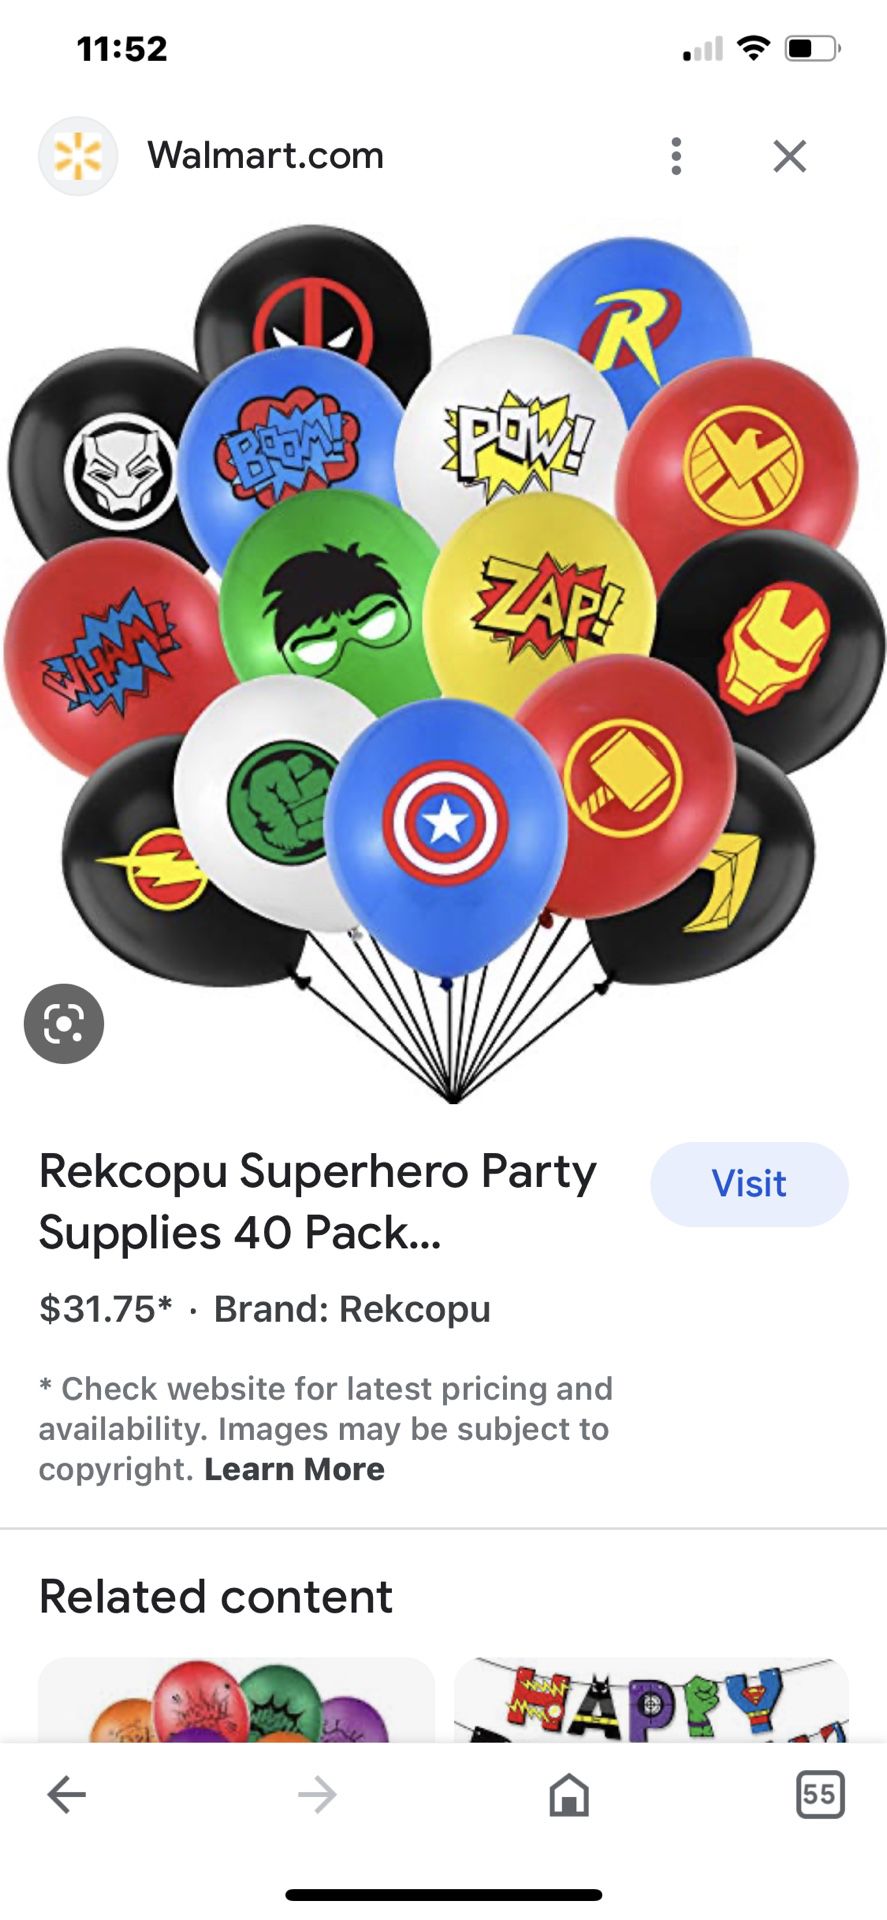 Rekcopu Superhero Party Supplies 40 Pack...